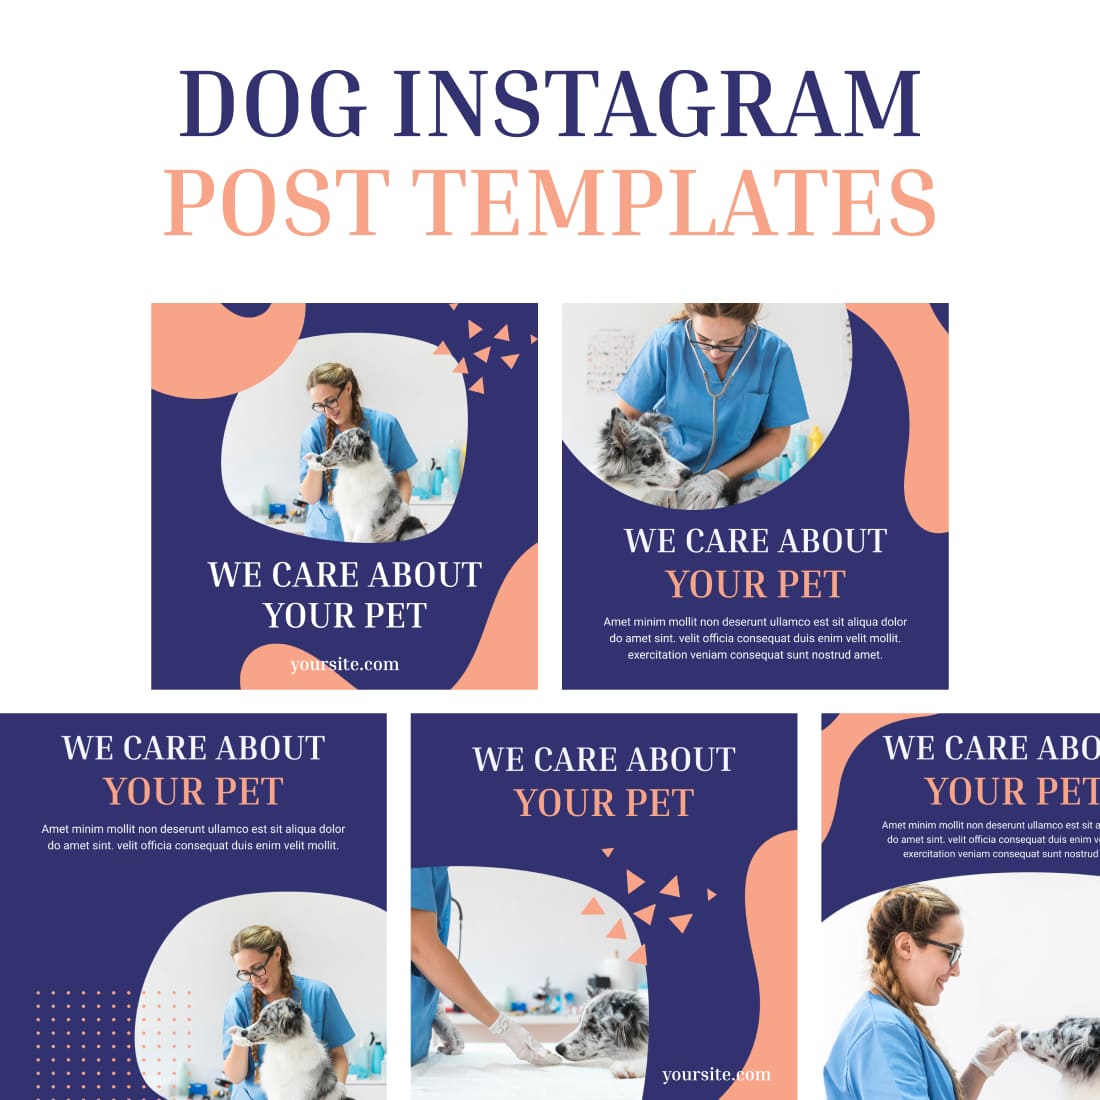 5 dog instagram post templates.